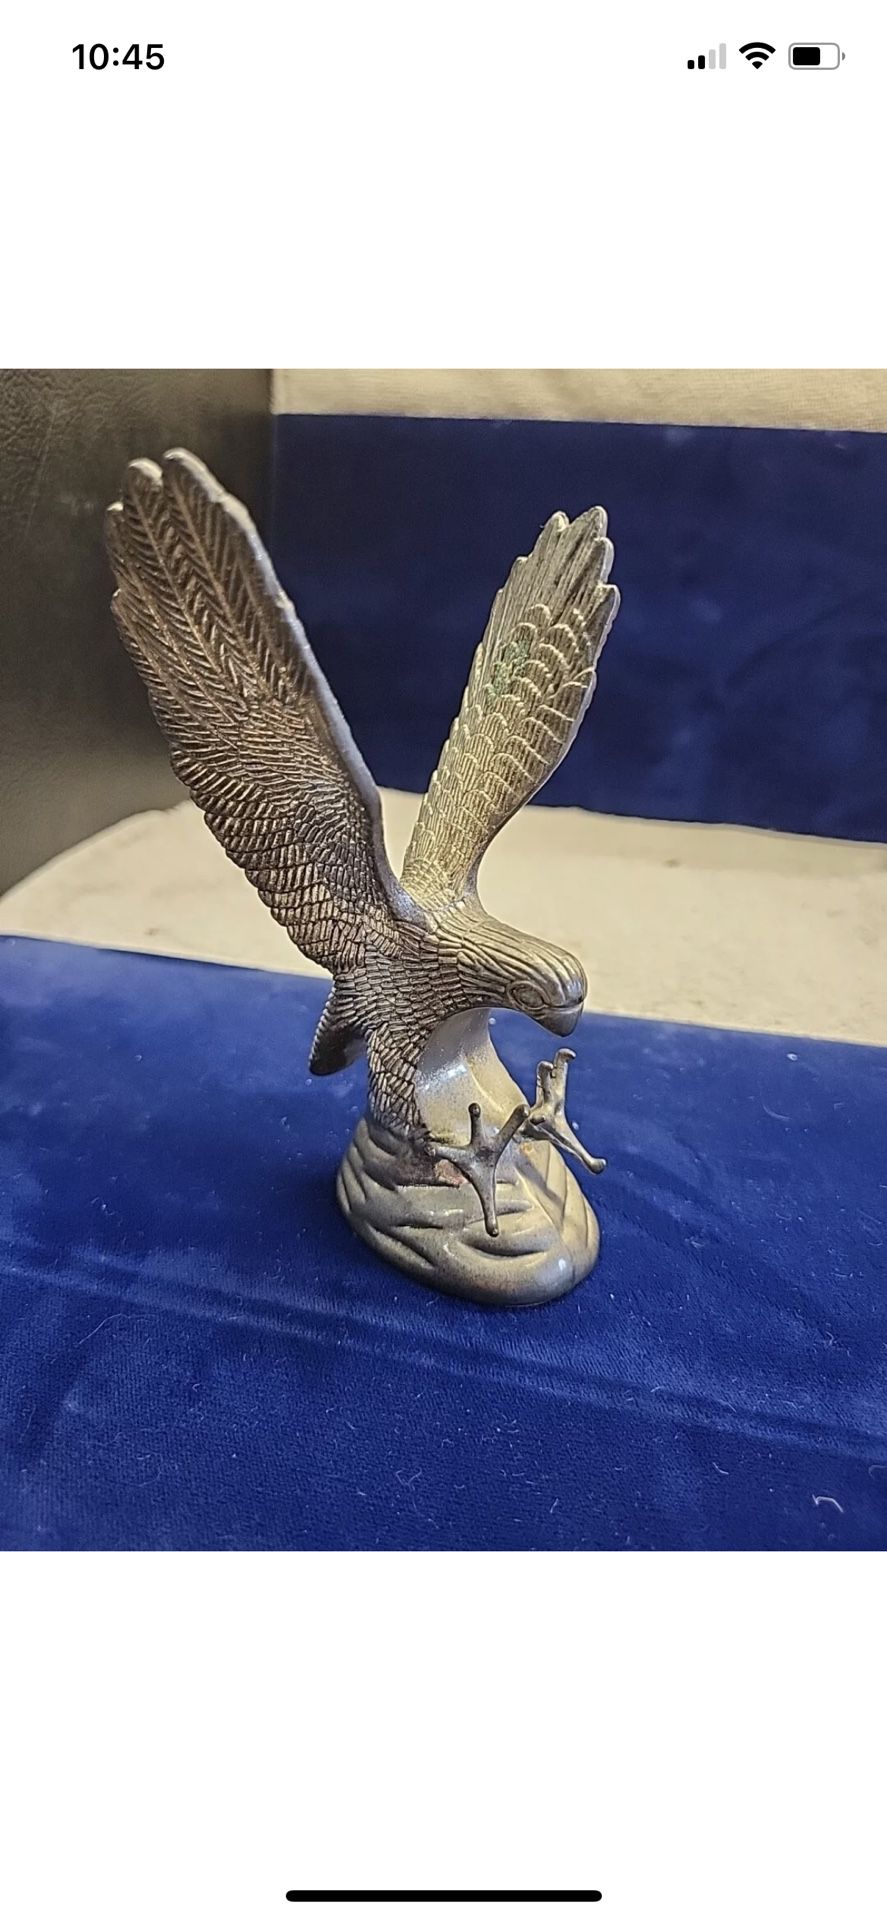 Hampshire Geniune Silverplated Eagle Sculpture Statue Figurine Bird USA